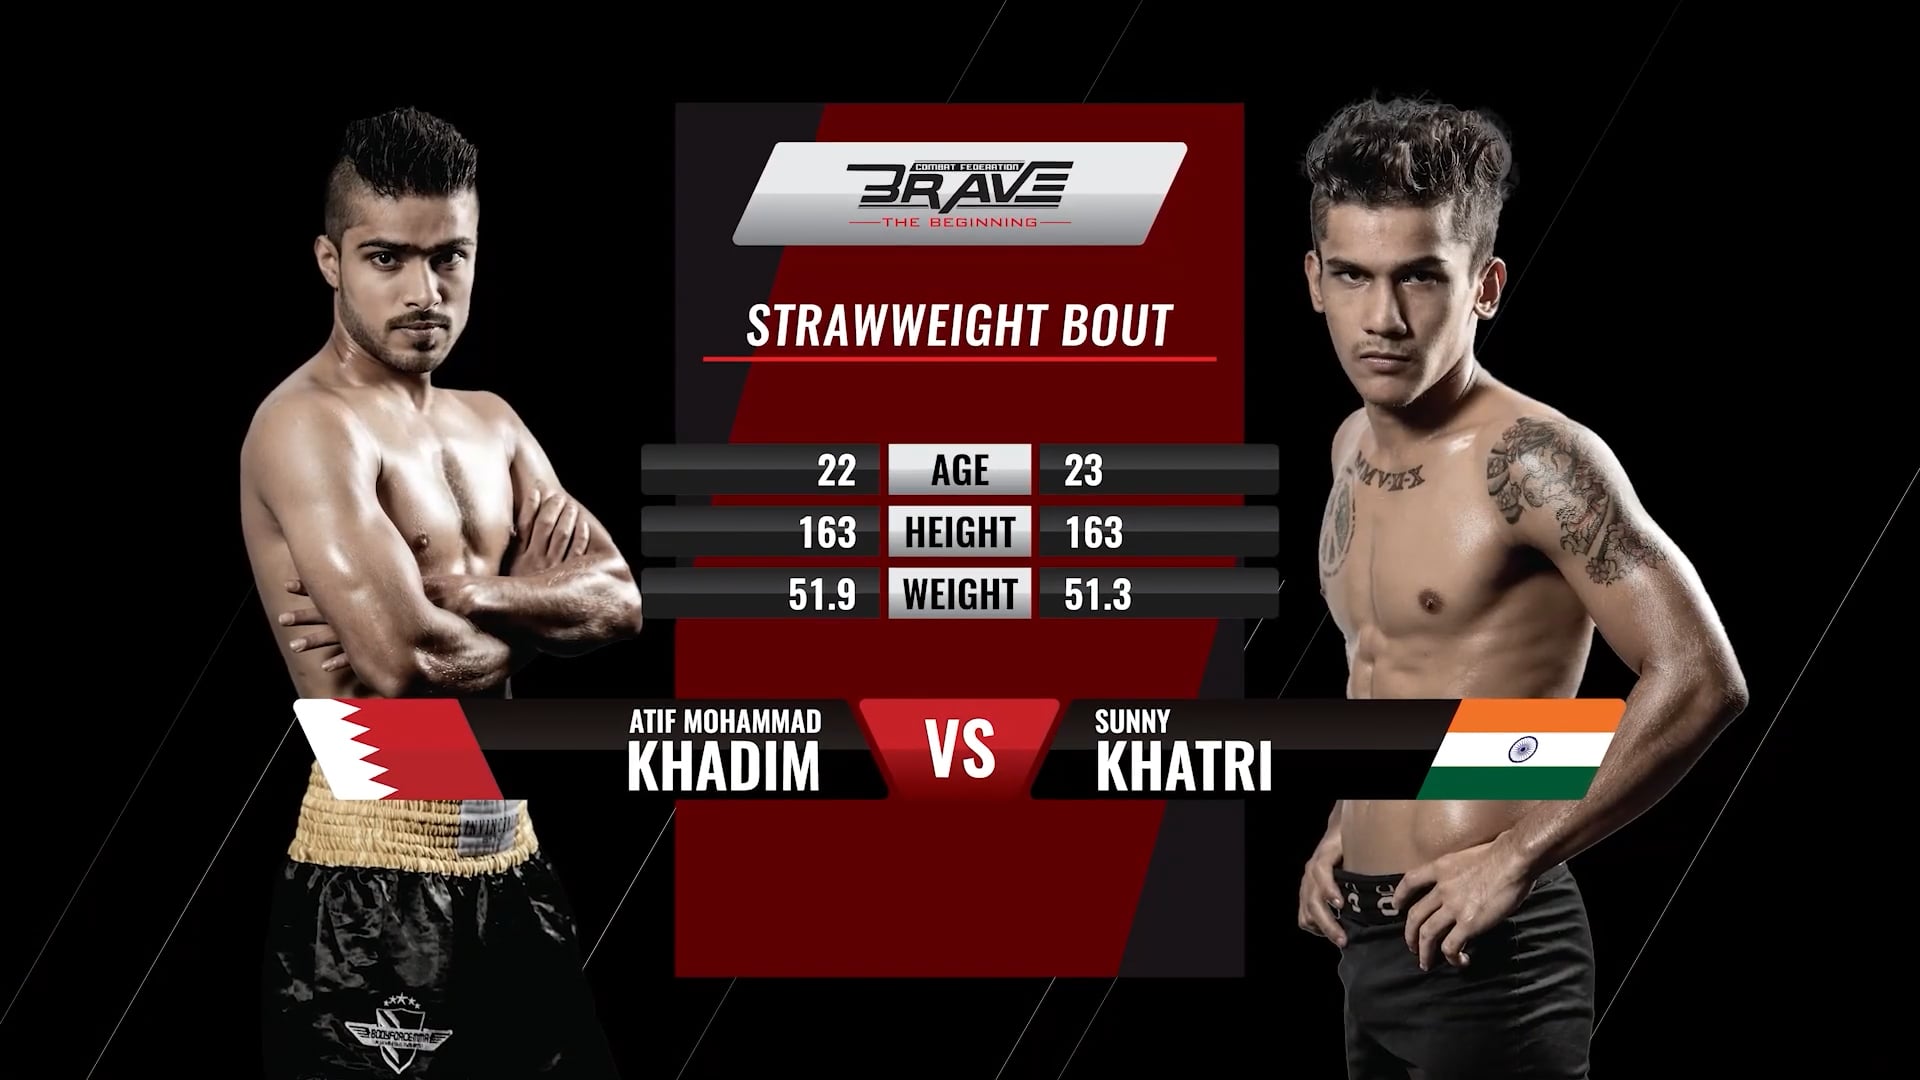 FREE MMA Fight Atif Mohammed Khadim vs Suny Khatri BRAVE CF 1.mp4 on Vimeo